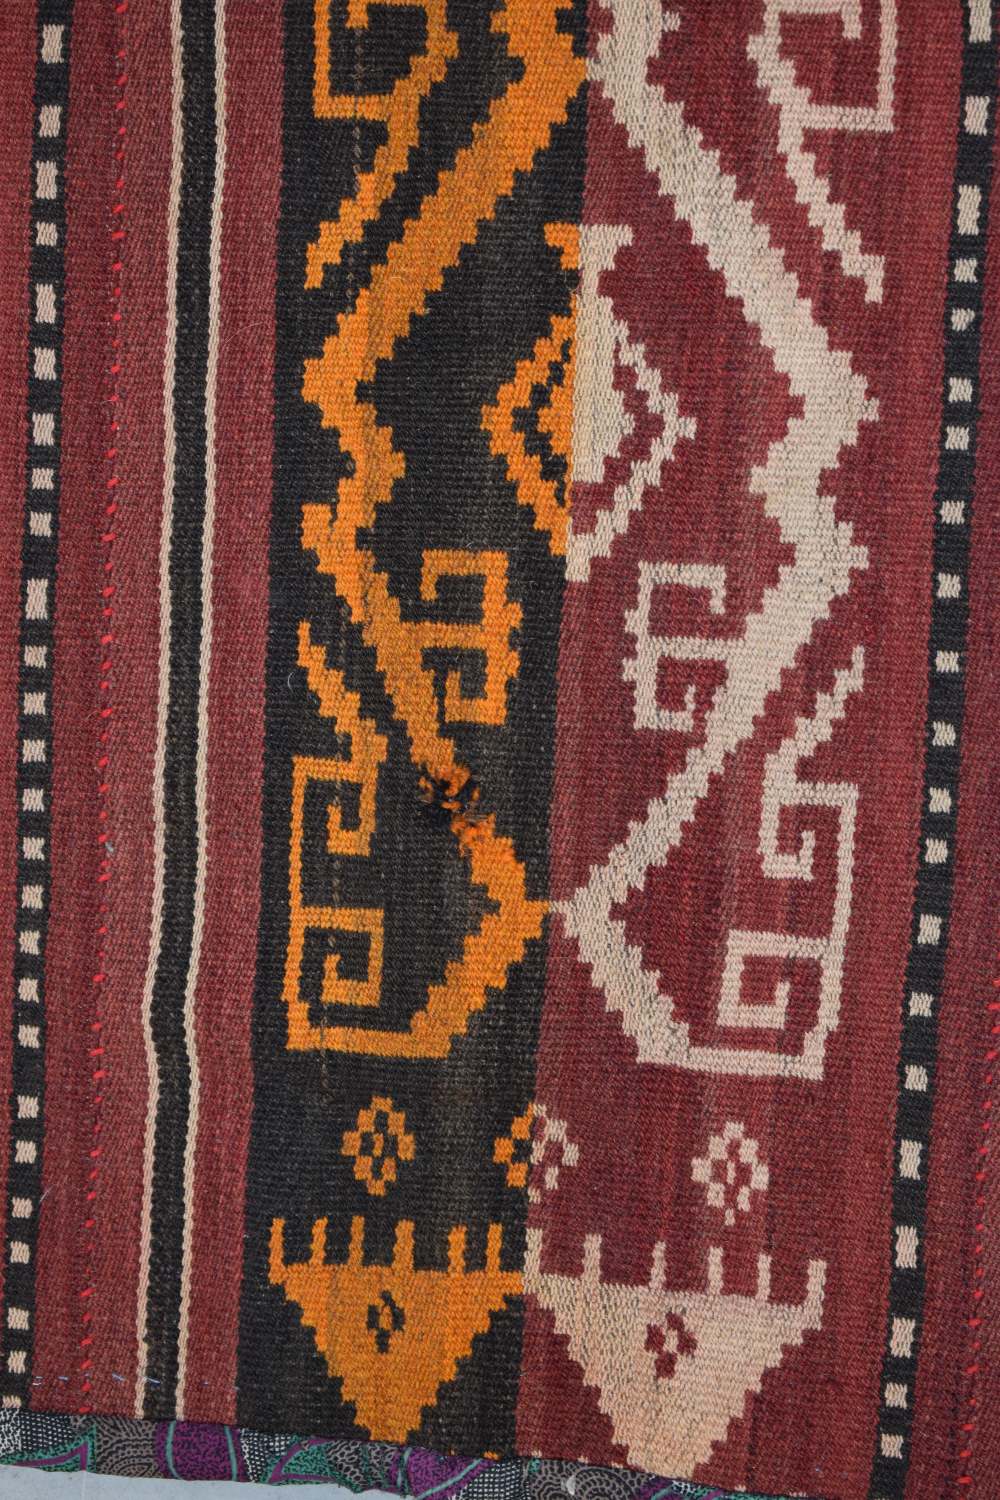 Uzbek warp faced ghudjeri, Uzbekistan, late 19th/early 20th century, 8ft. 4in. X 5ft. 10in. 2.54m. X - Image 9 of 12